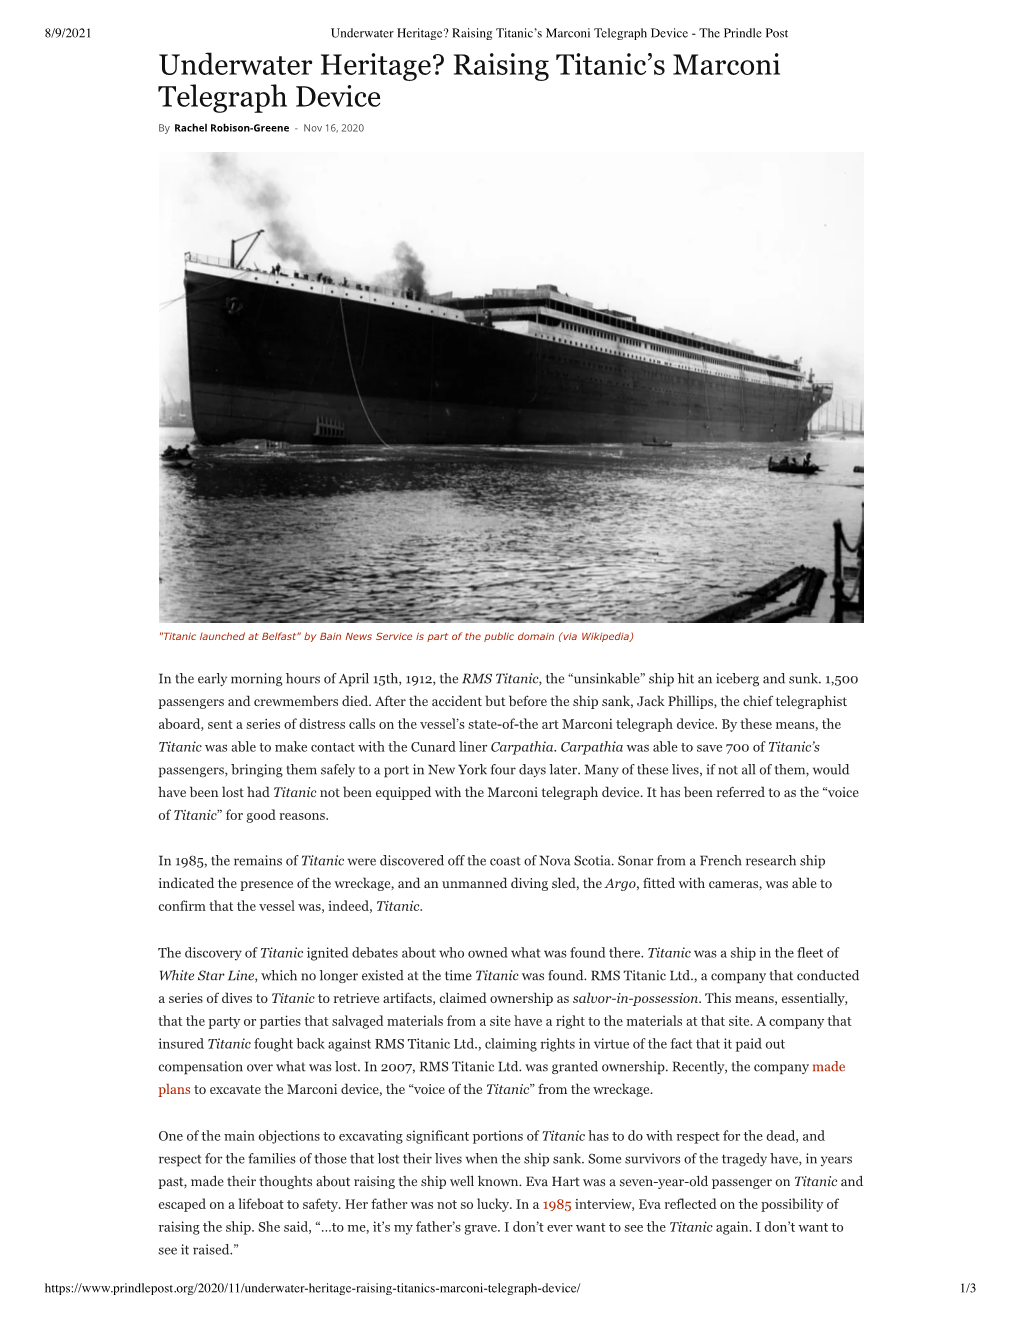 Underwater Heritage? Raising Titanic's Marconi Telegraph Device